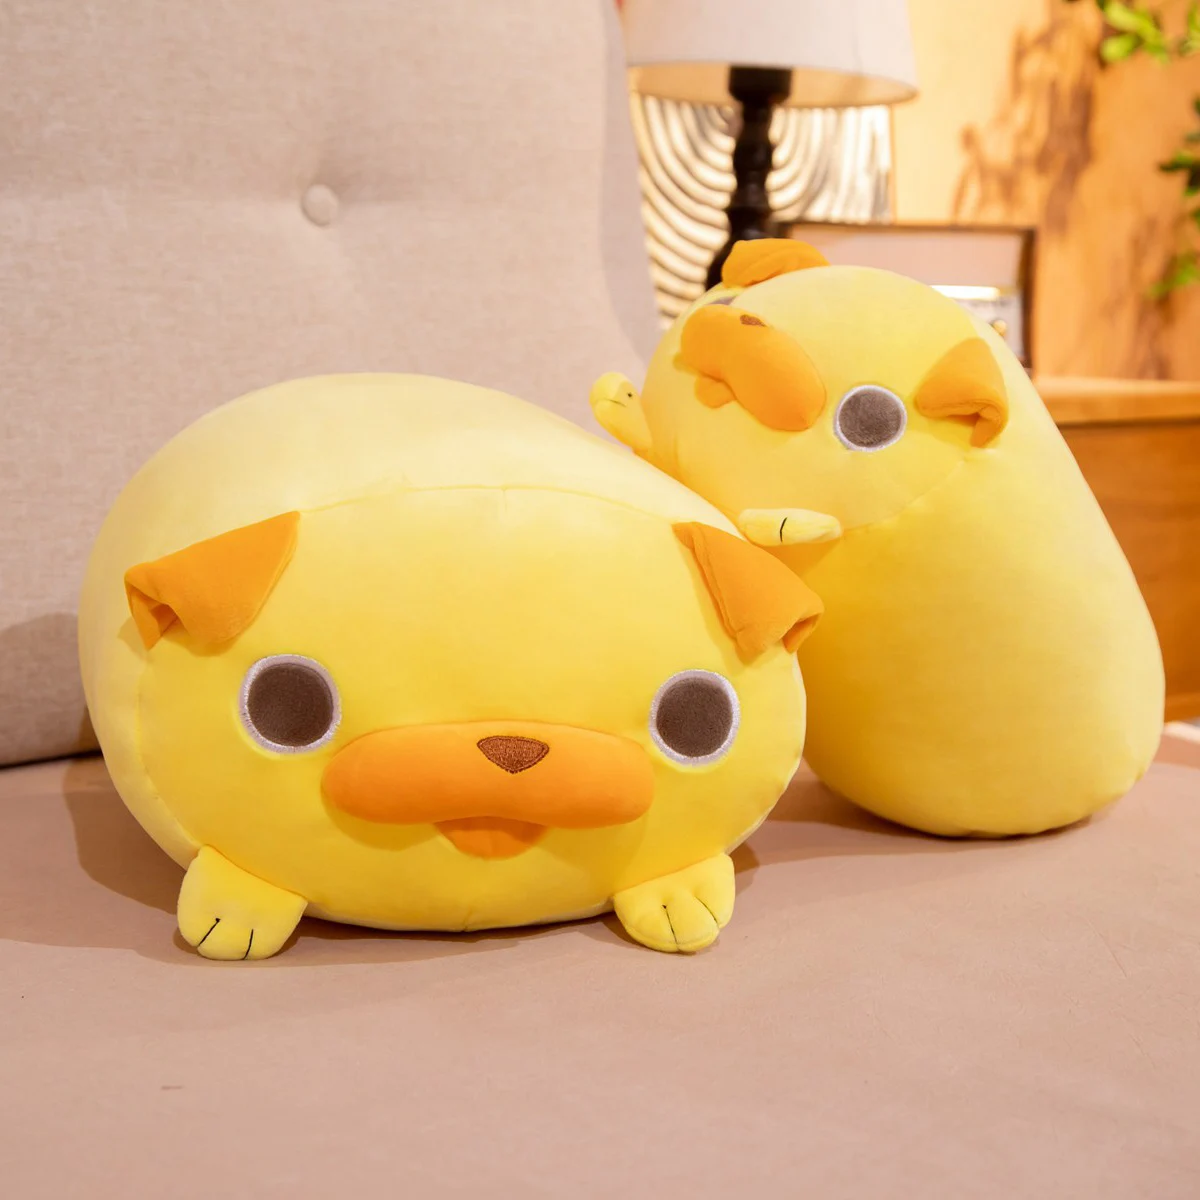 Kawaii Chubby Pug Plush (40cm) - Limited Edition